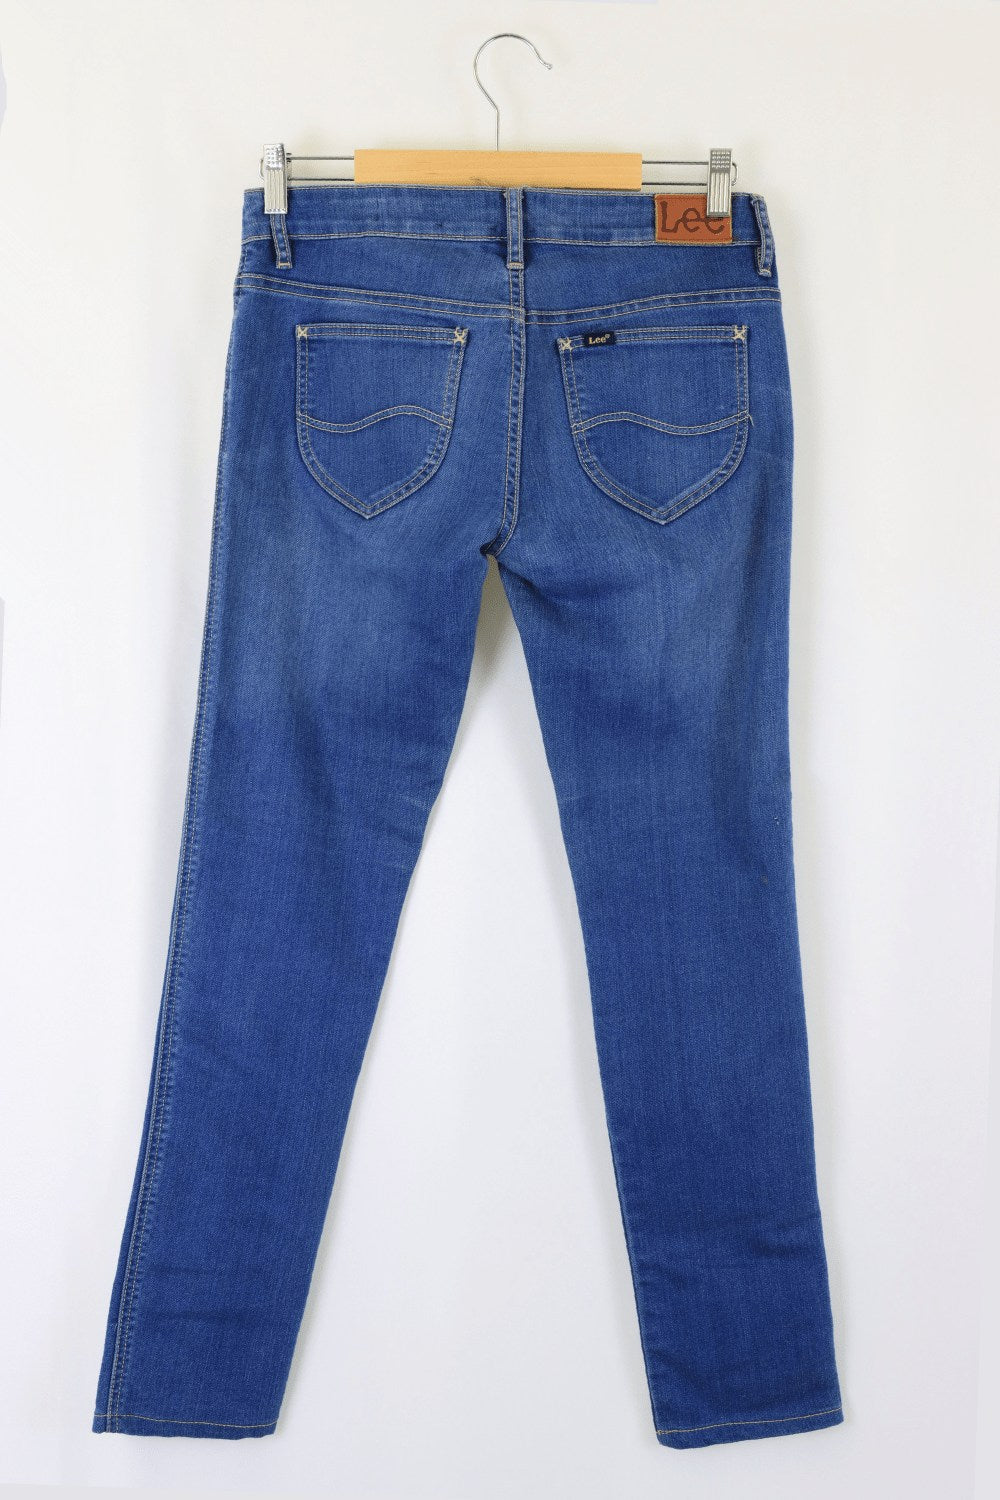 Lee Blue Jeans 10